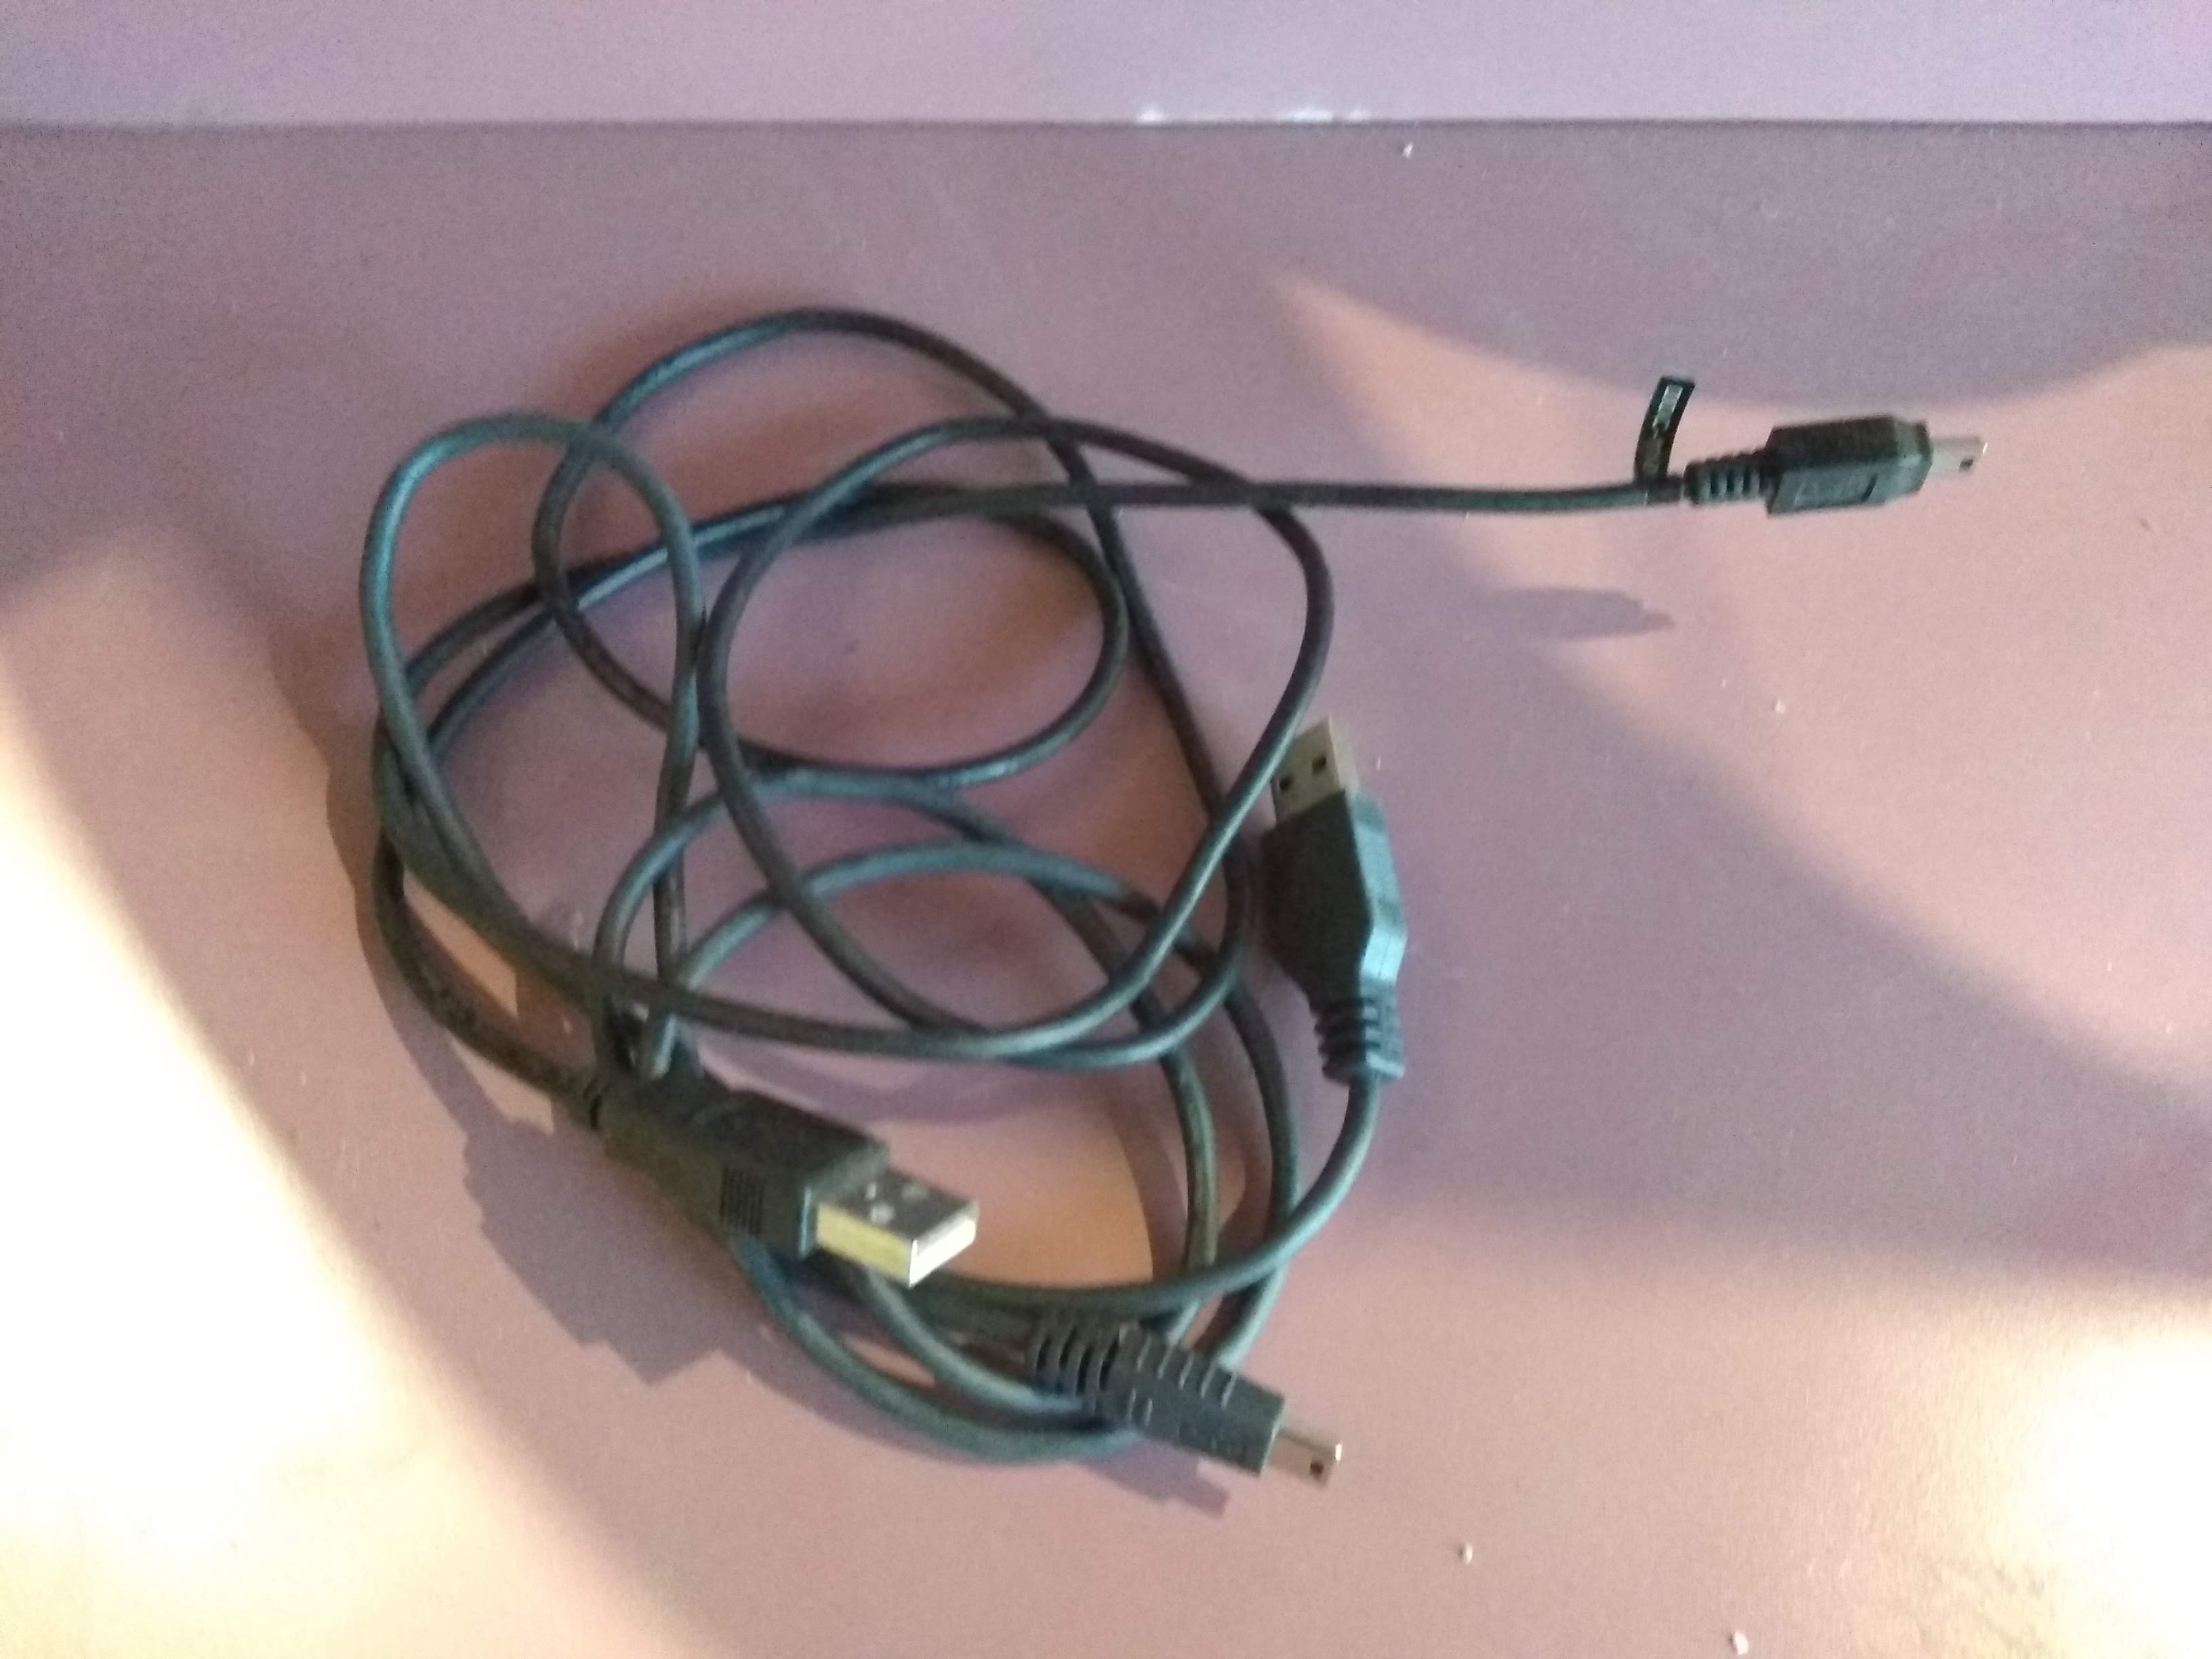 Cables, USB